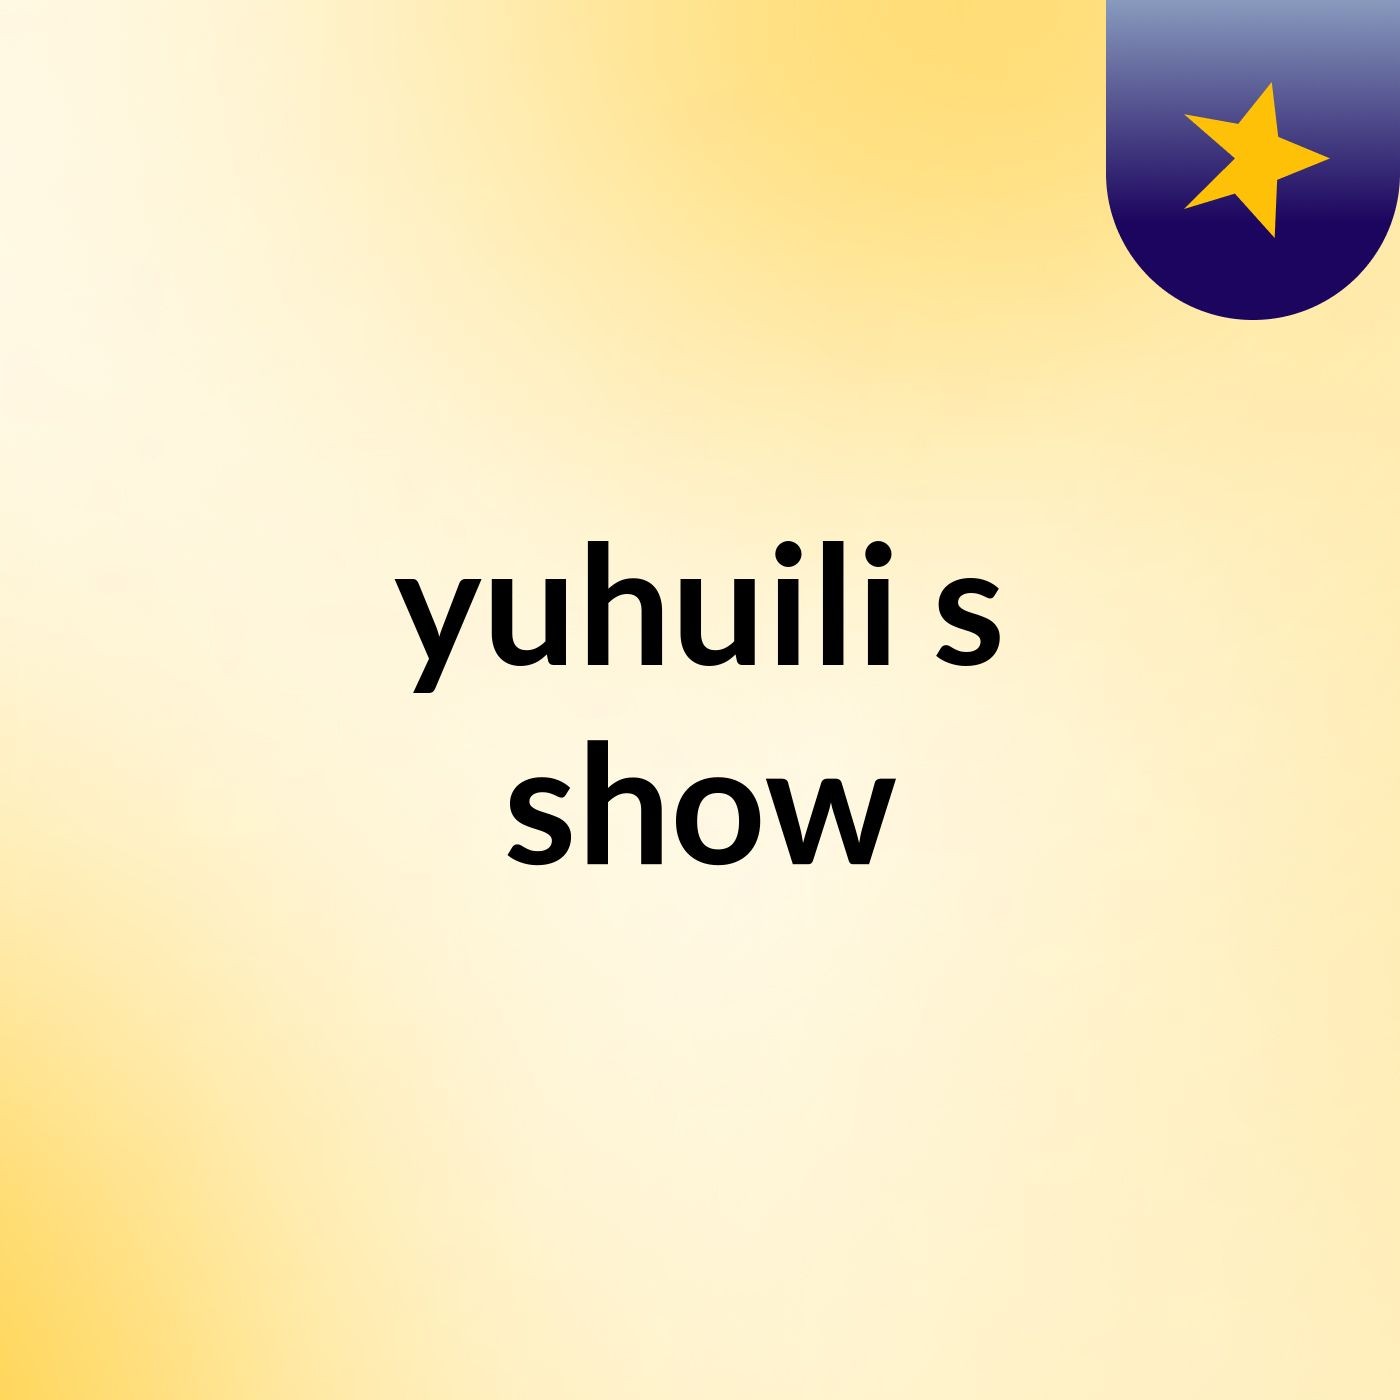 yuhuili's show